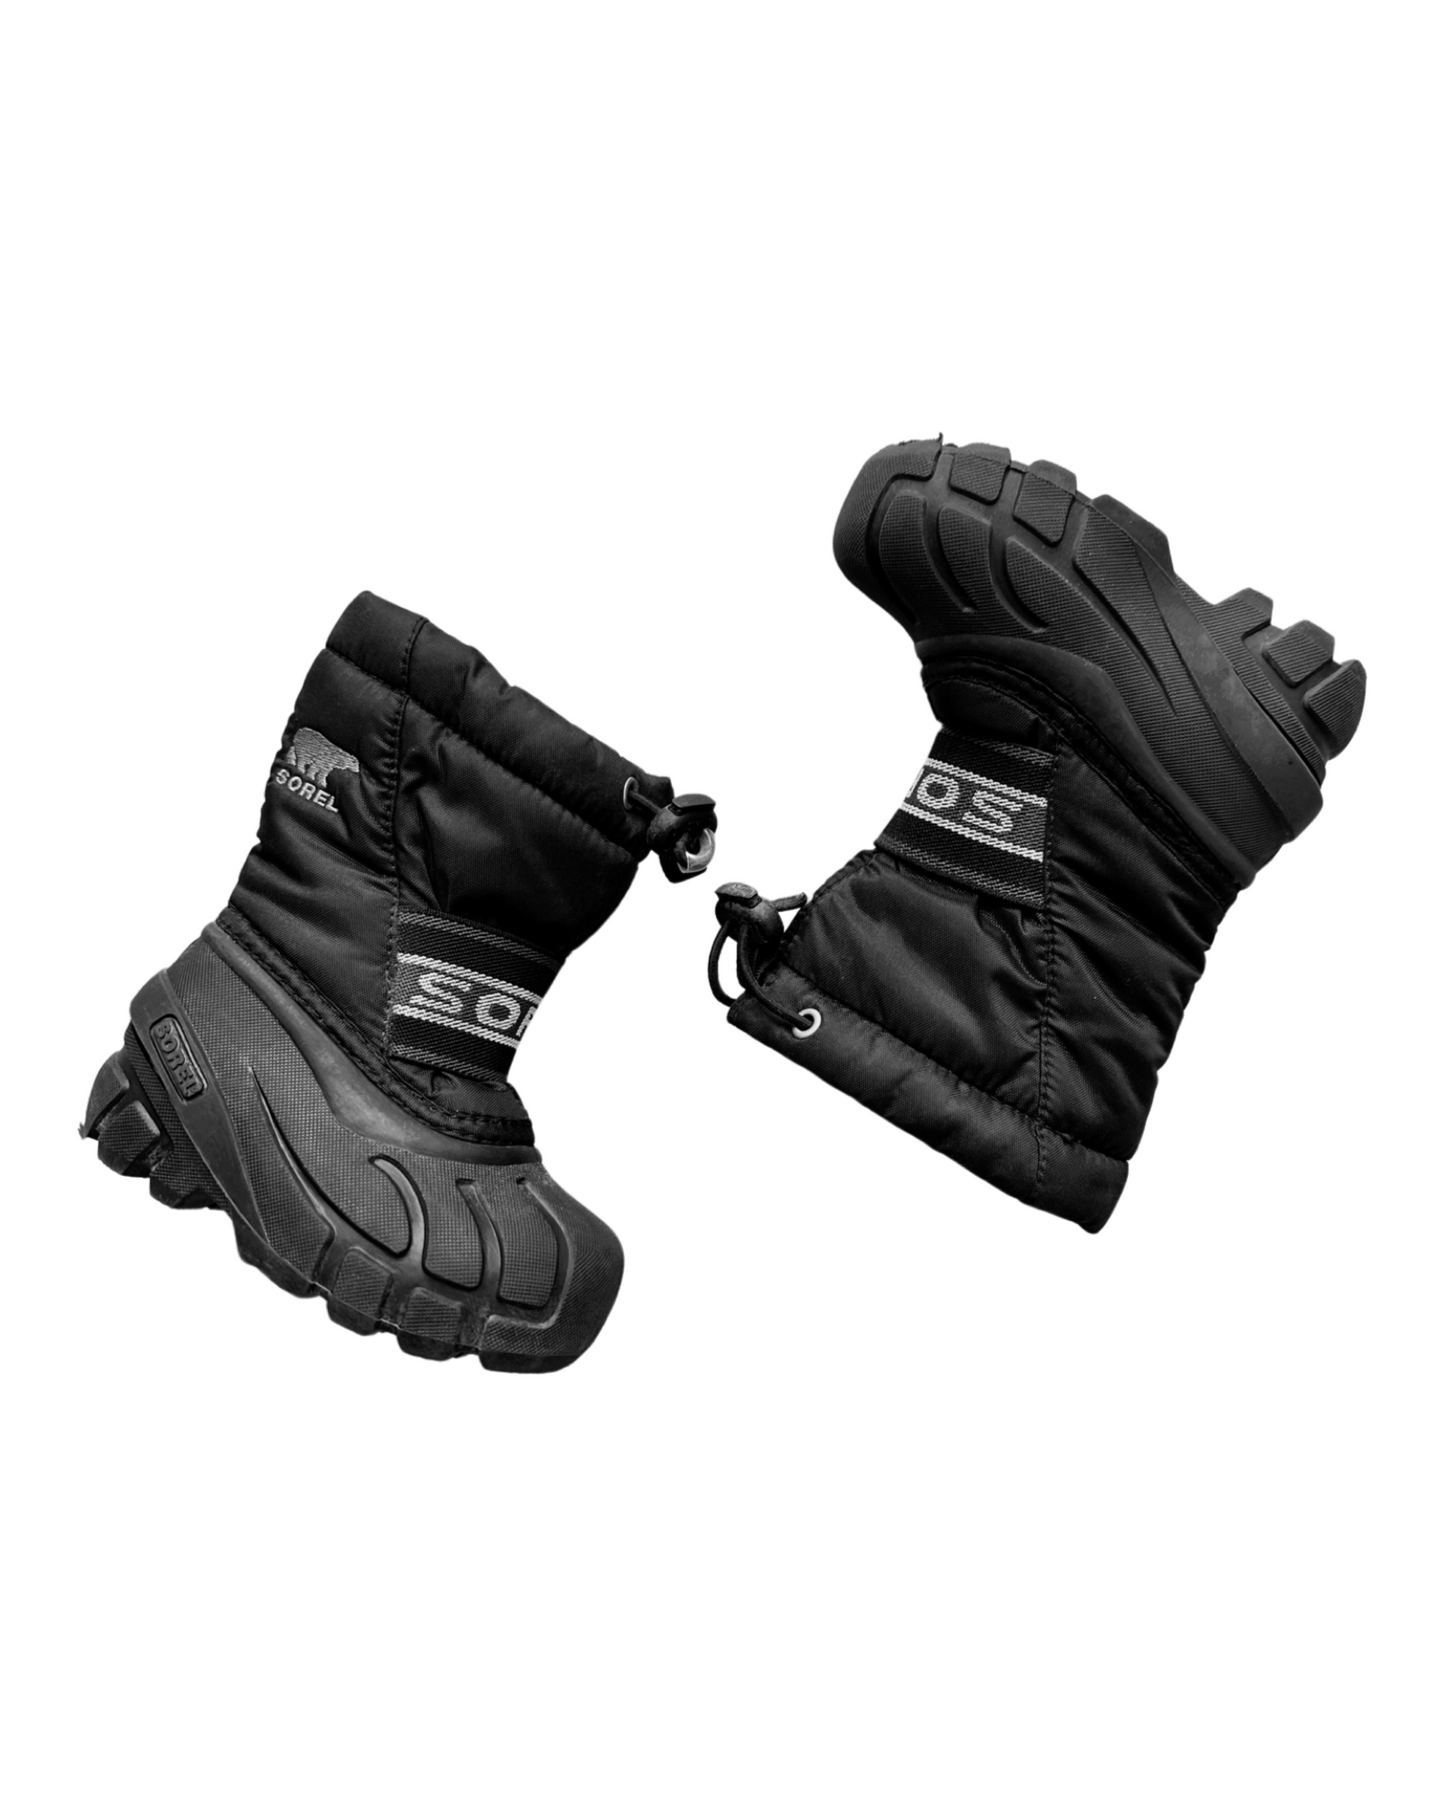 Sorel toddler snow boot in black (size UK5/EU22)